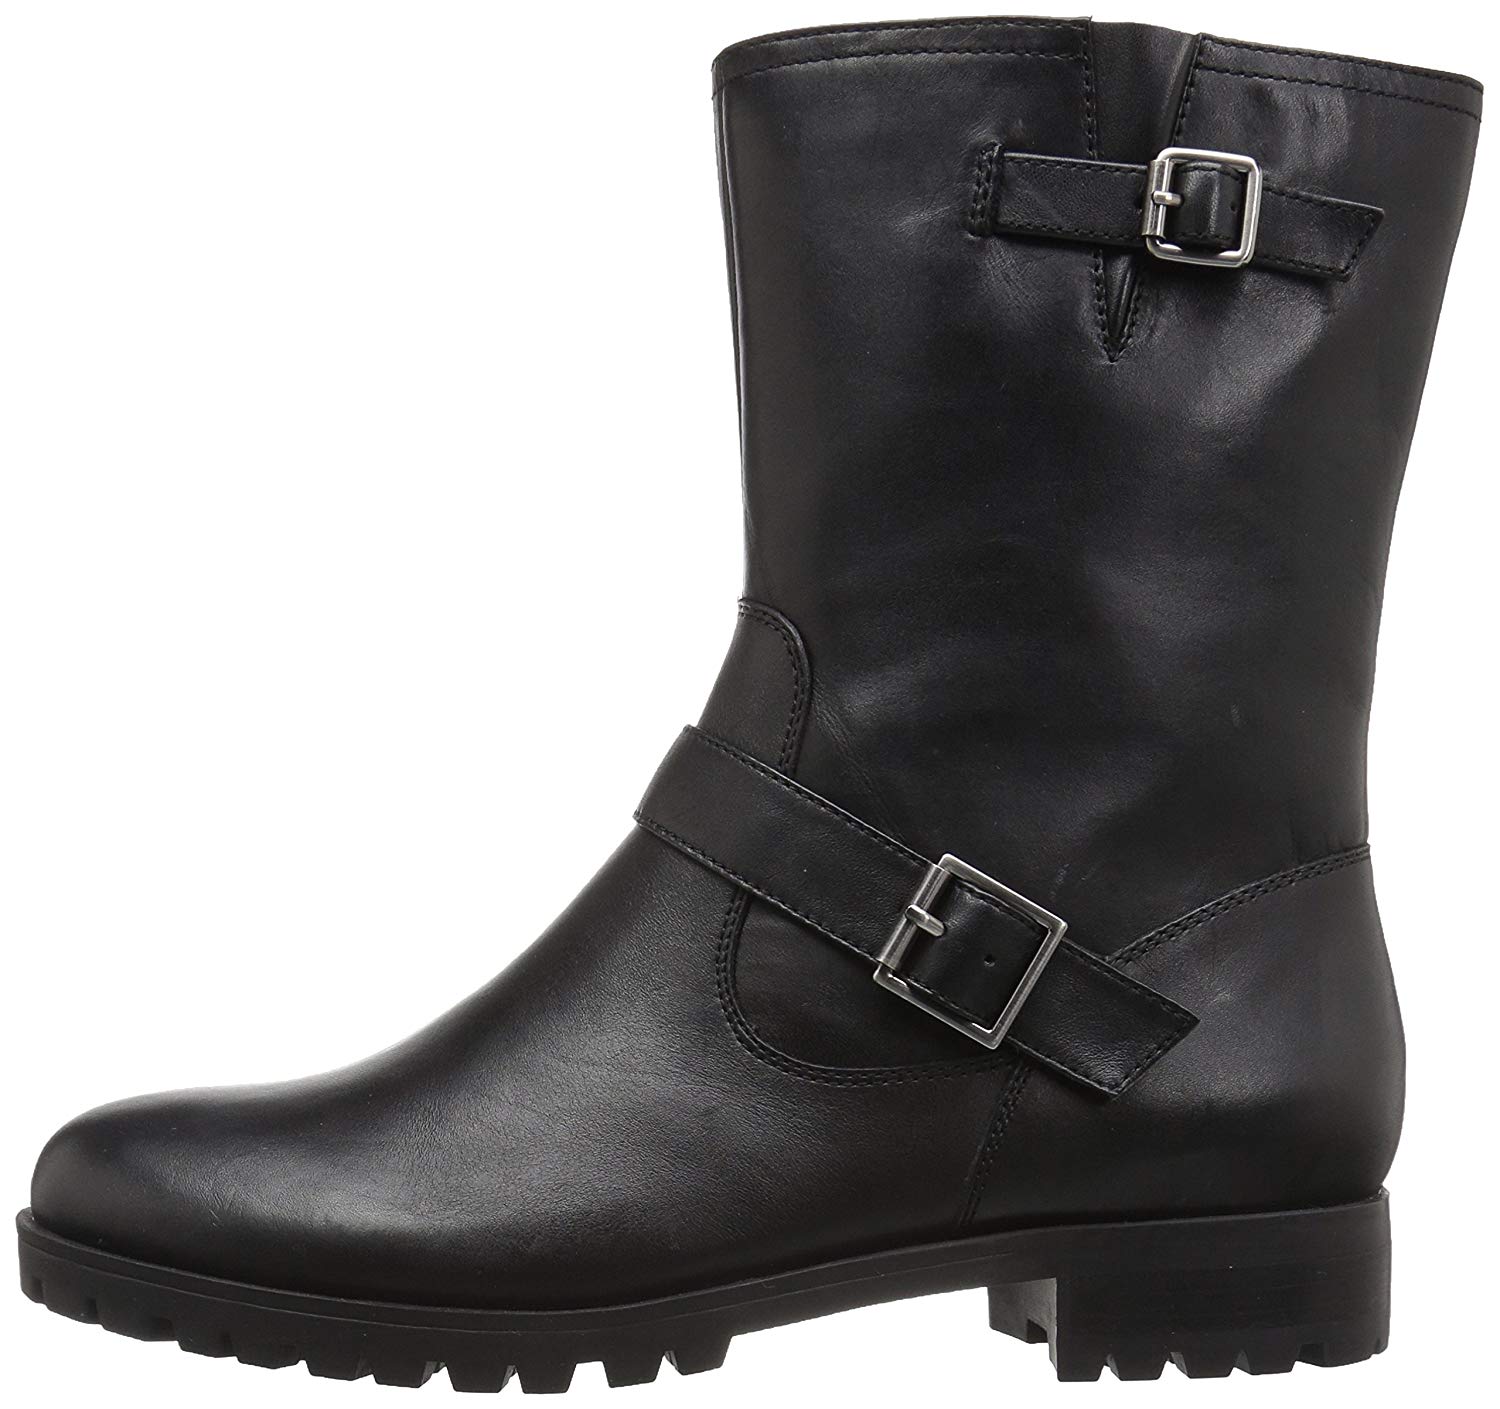 Tahari Womens Daria Buckle Mid-Calf Casual Boots, Black, Size 7.0 IPWU ...